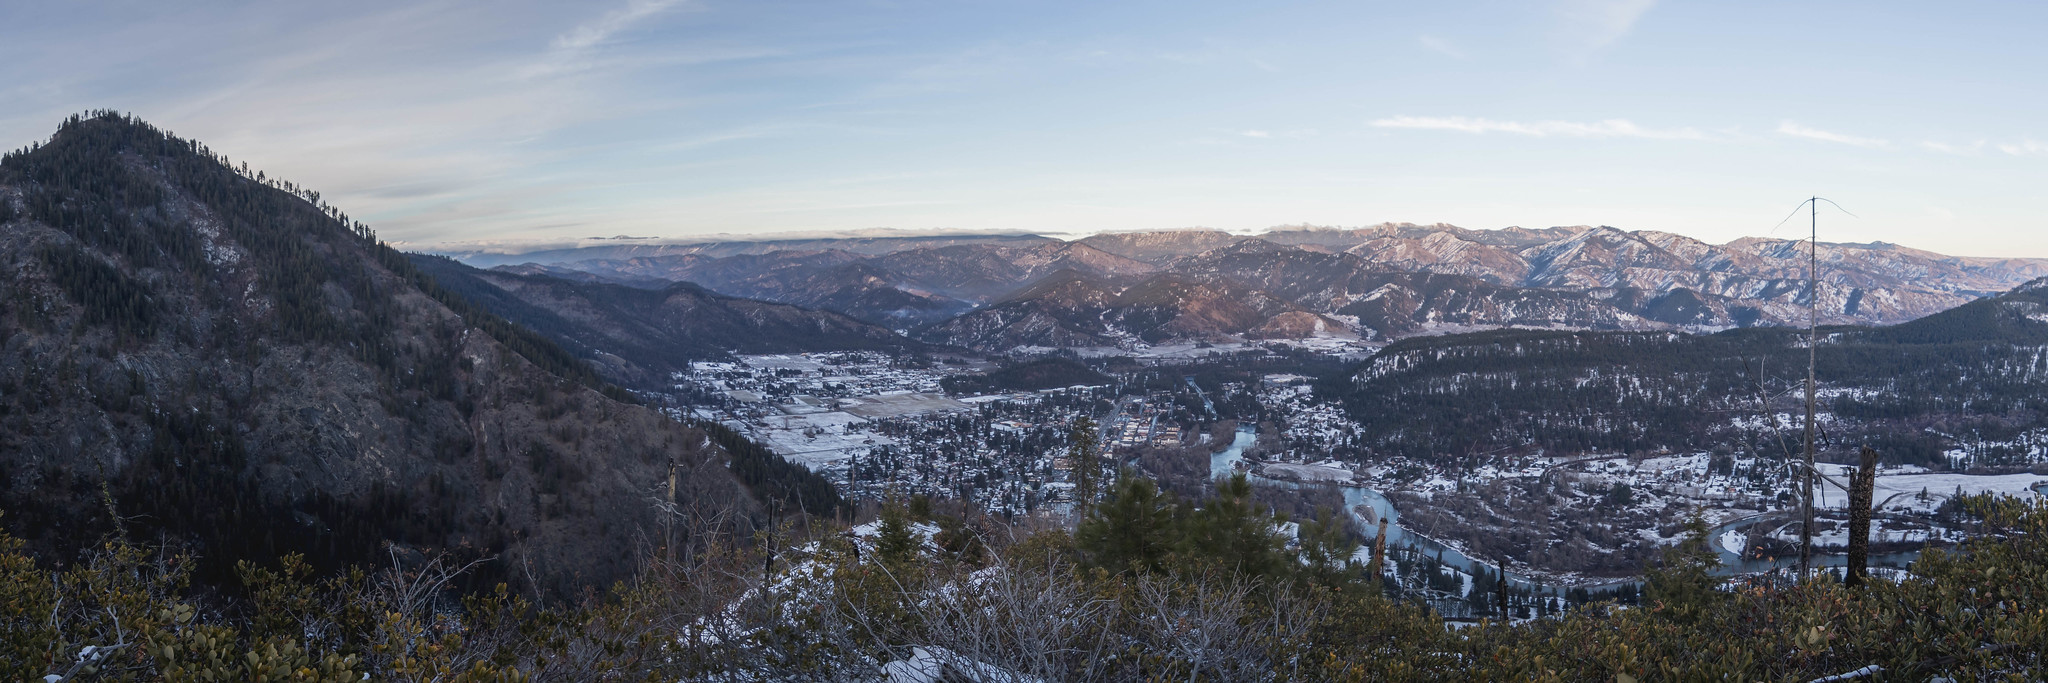 Panoramic view over Leavenworth